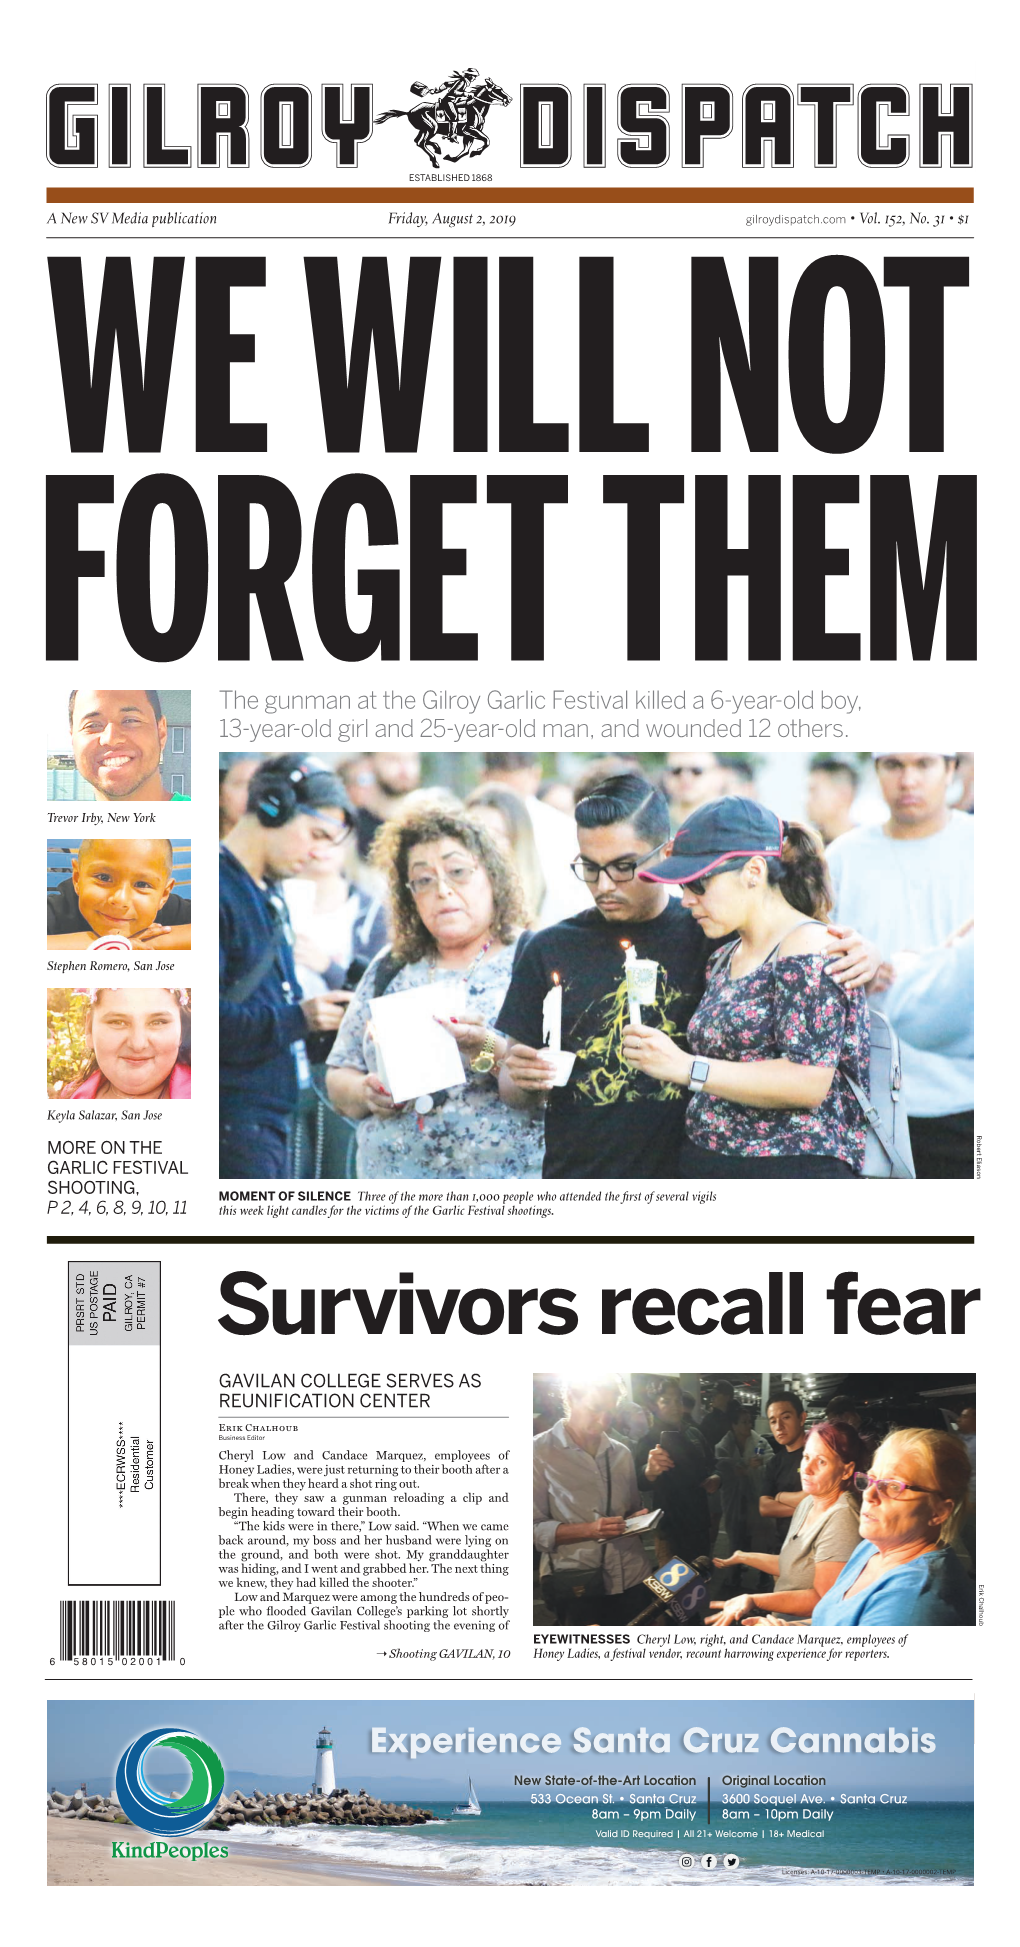 Survivors Recall Fear GAVILAN COLLEGE SERVES AS REUNIFICATION CENTER